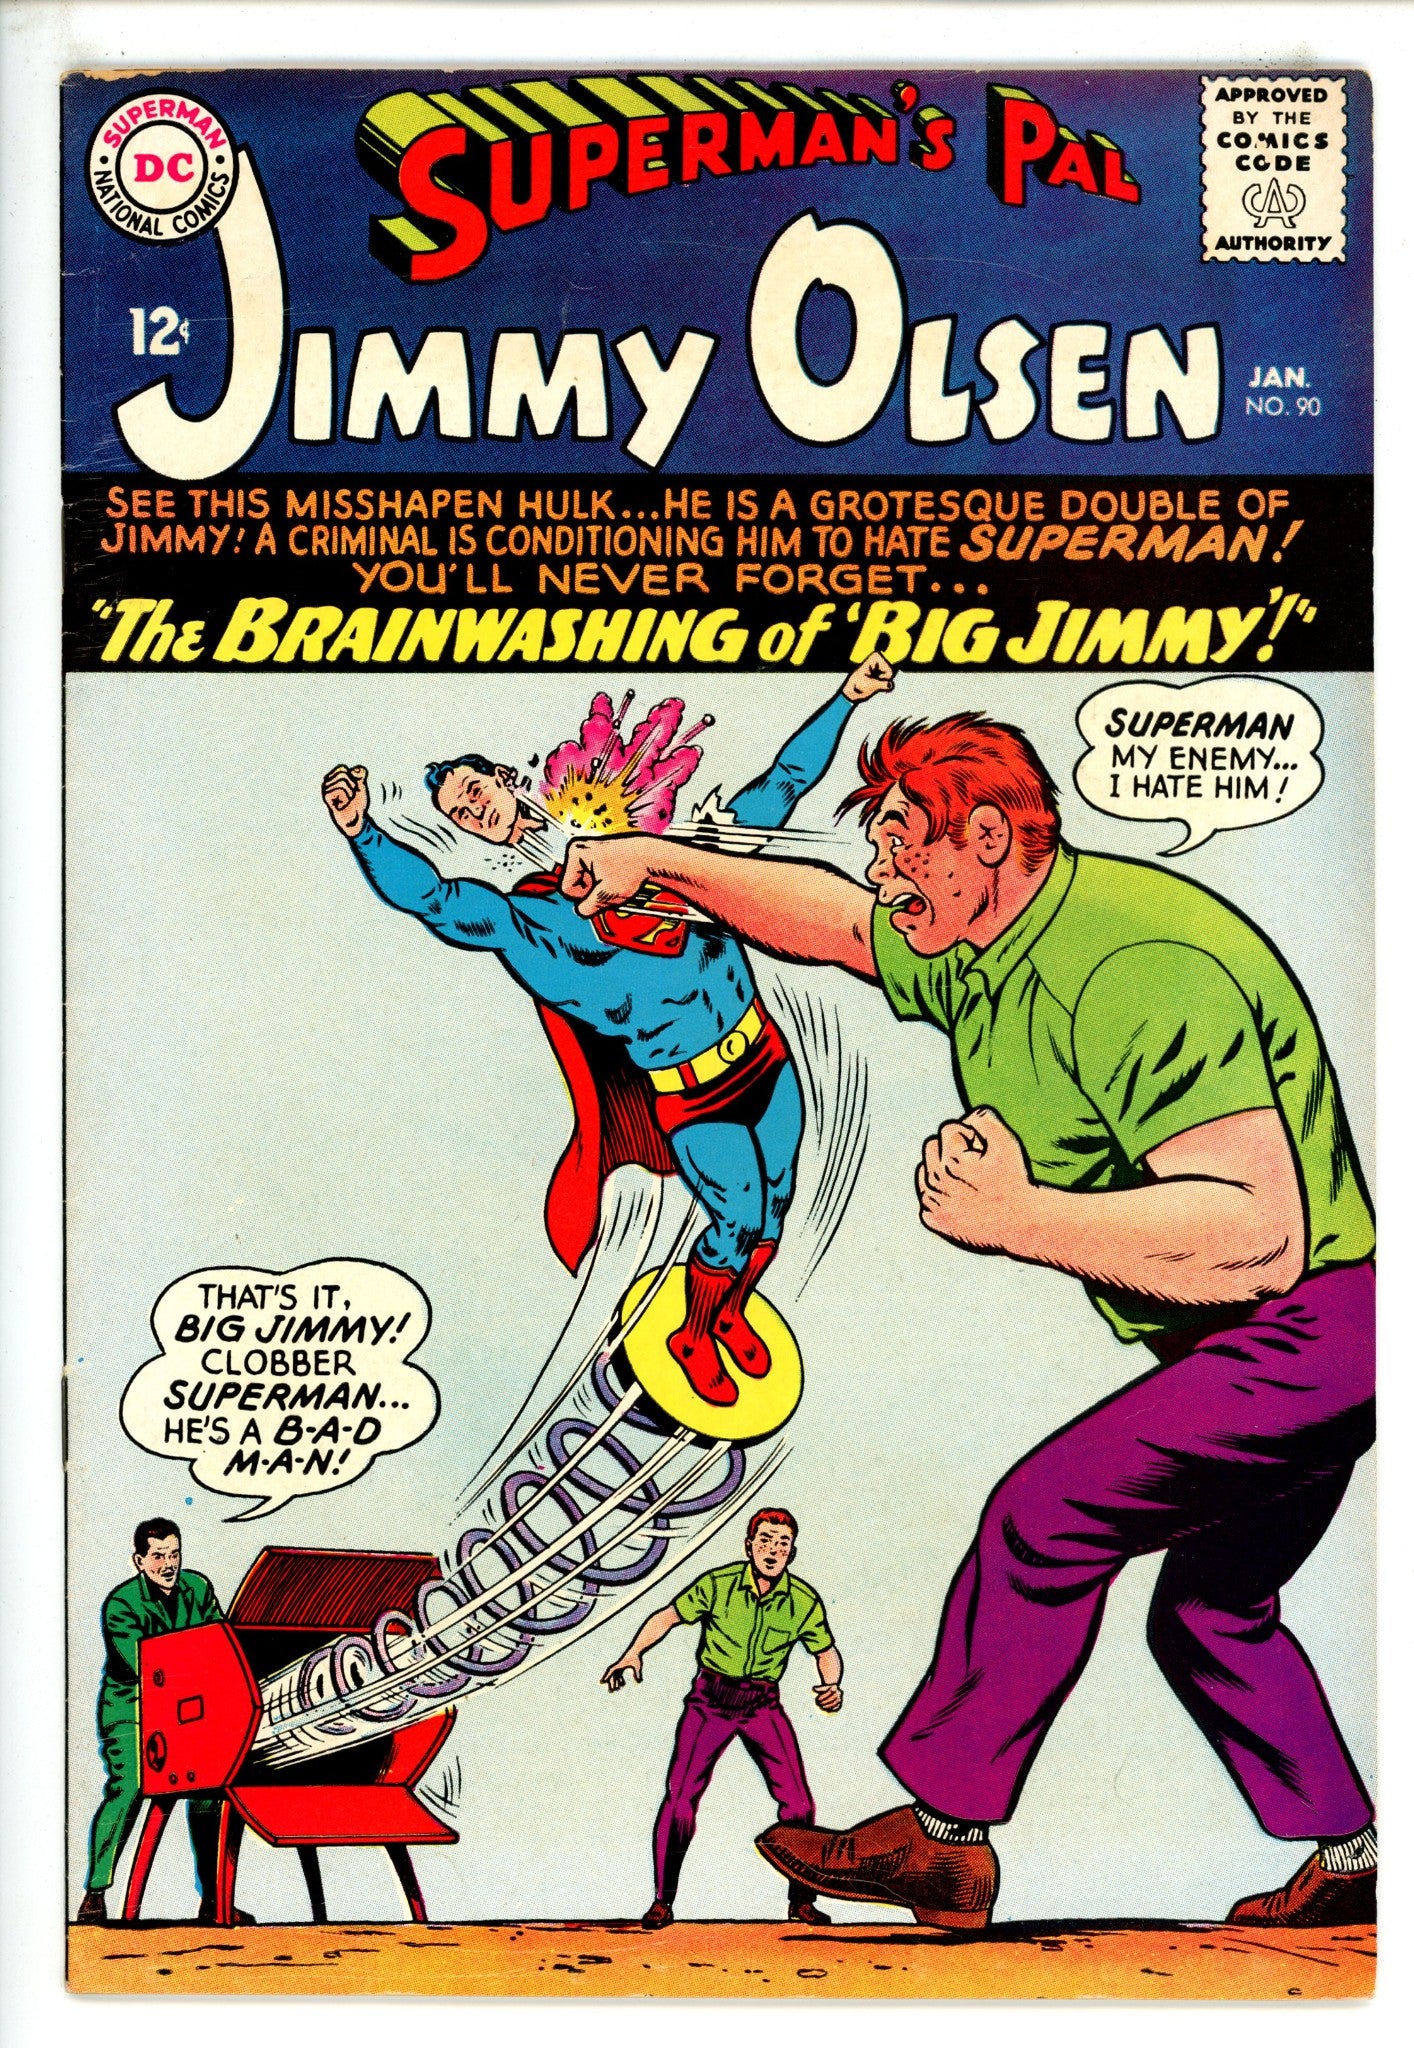 Superman's Pal, Jimmy Olsen 90 FN (1965)